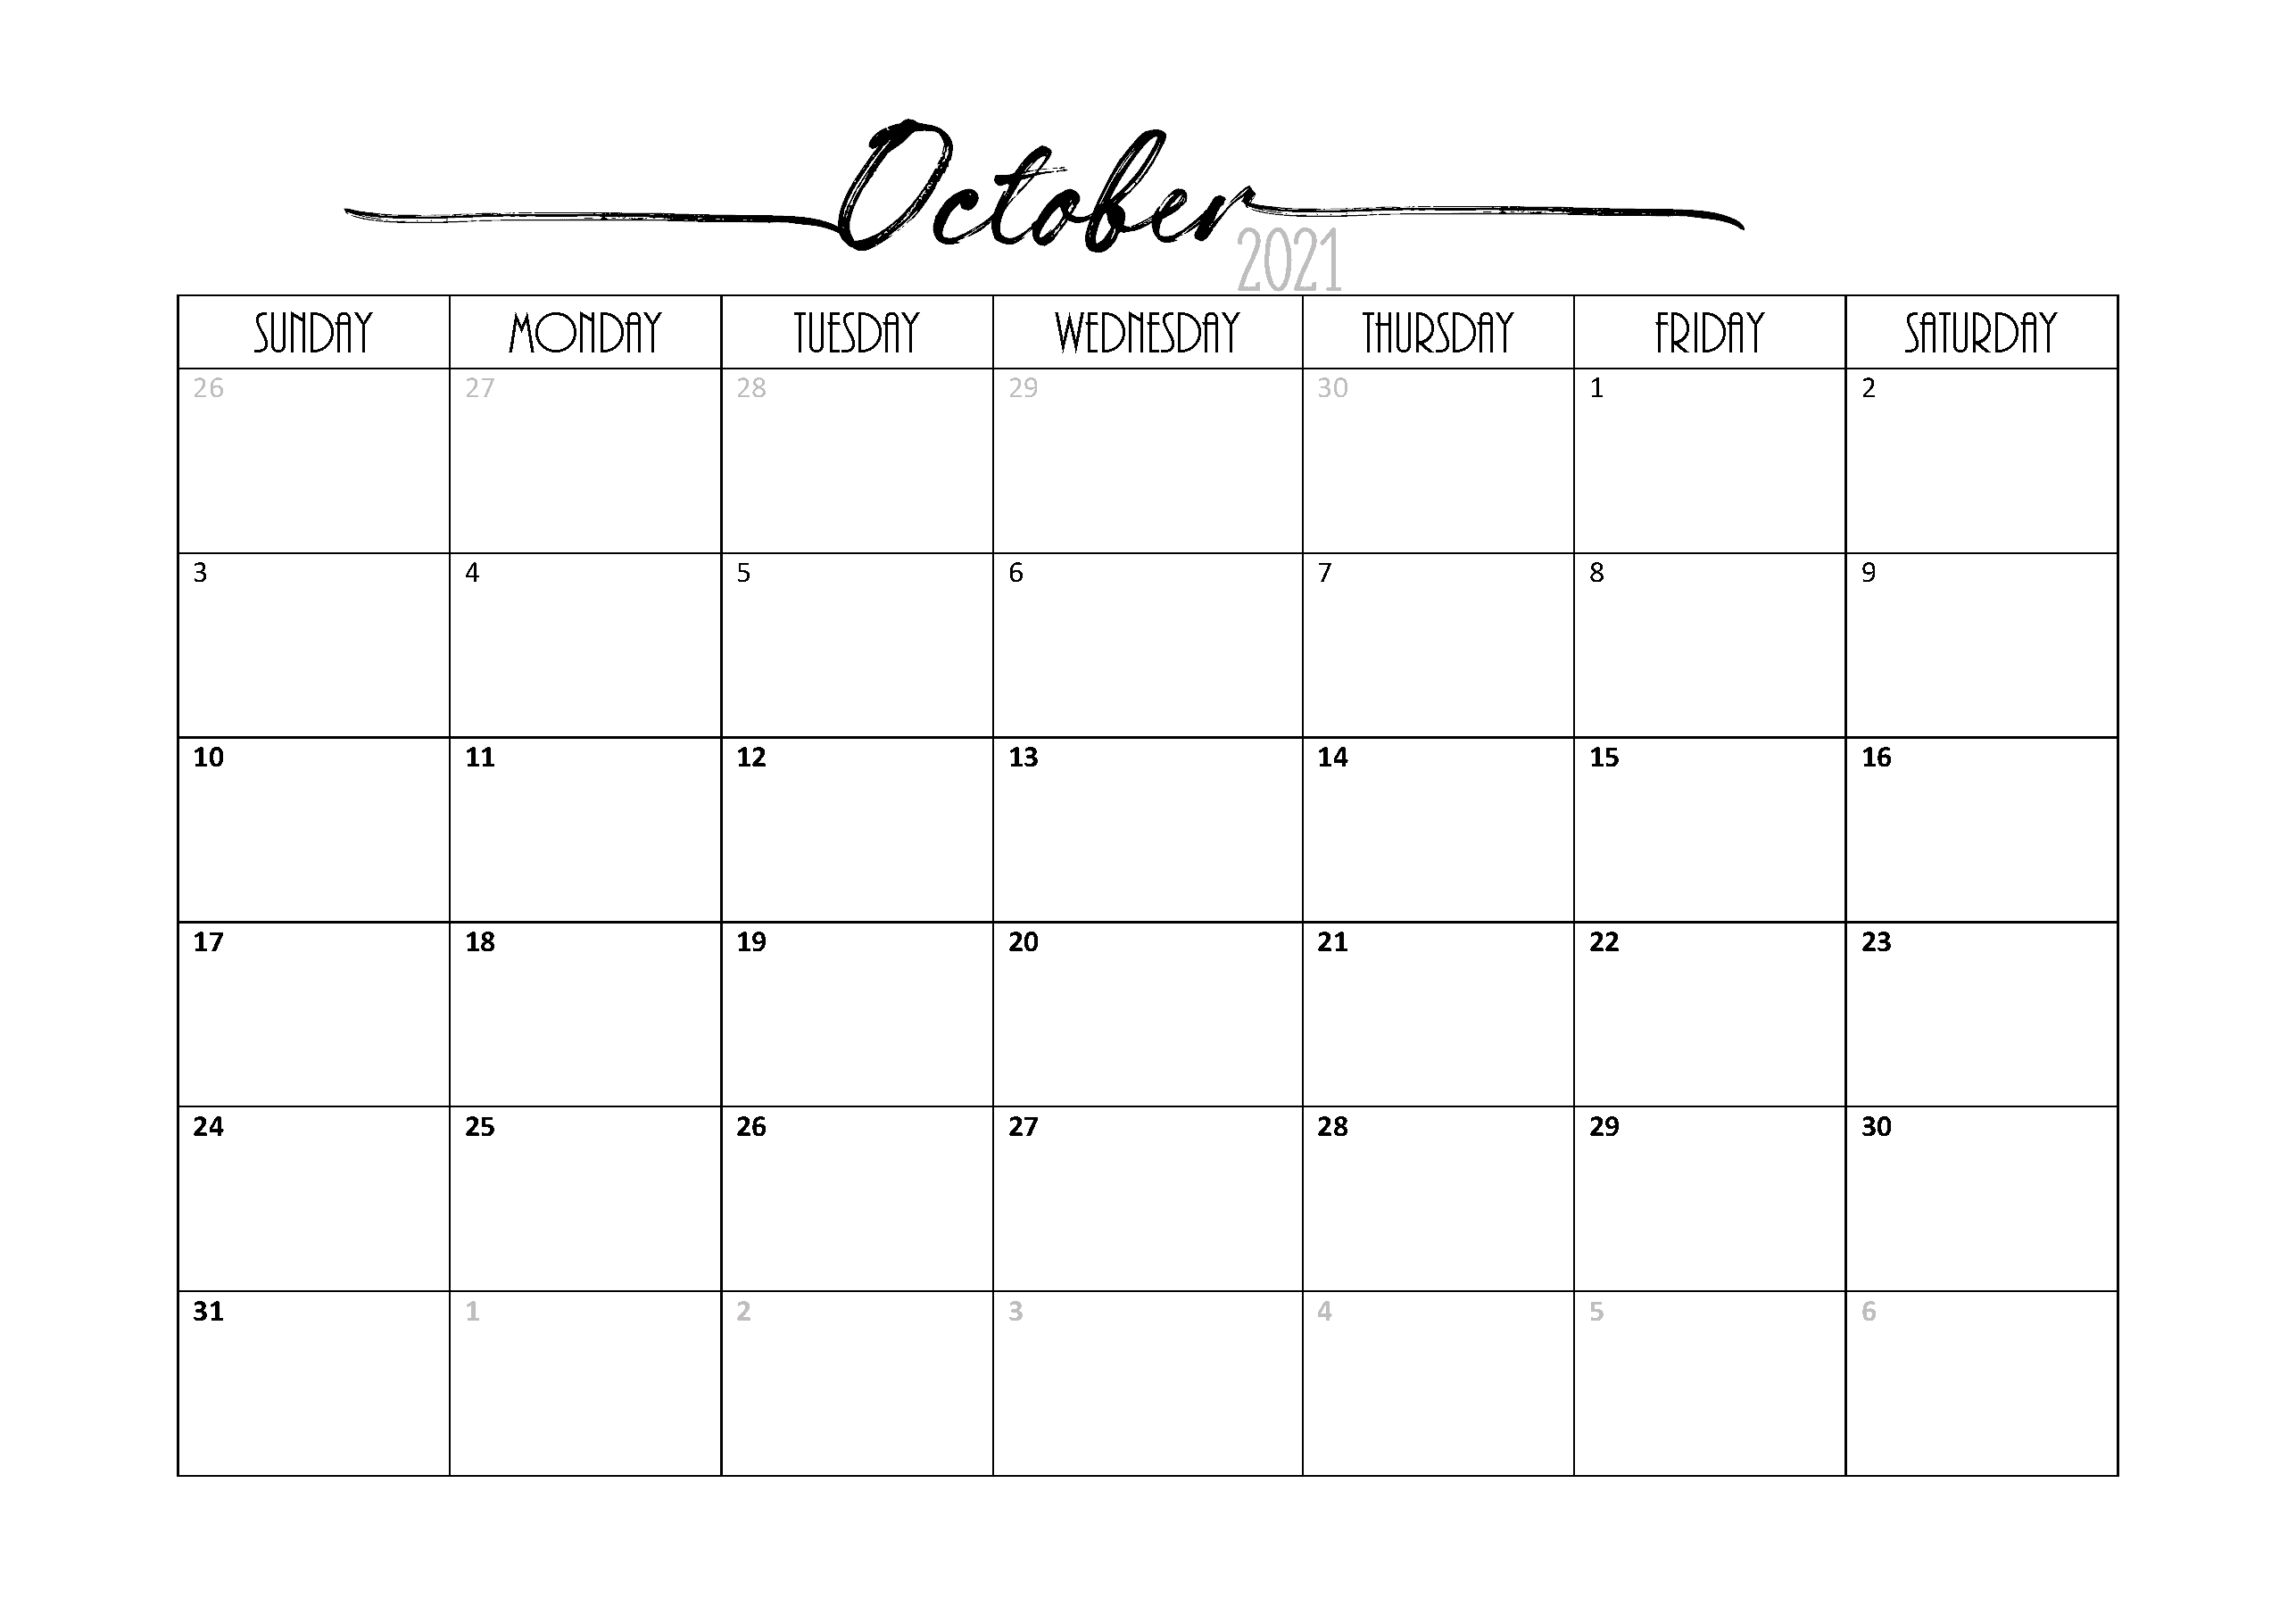 October 2020 to September 2021 Calendar